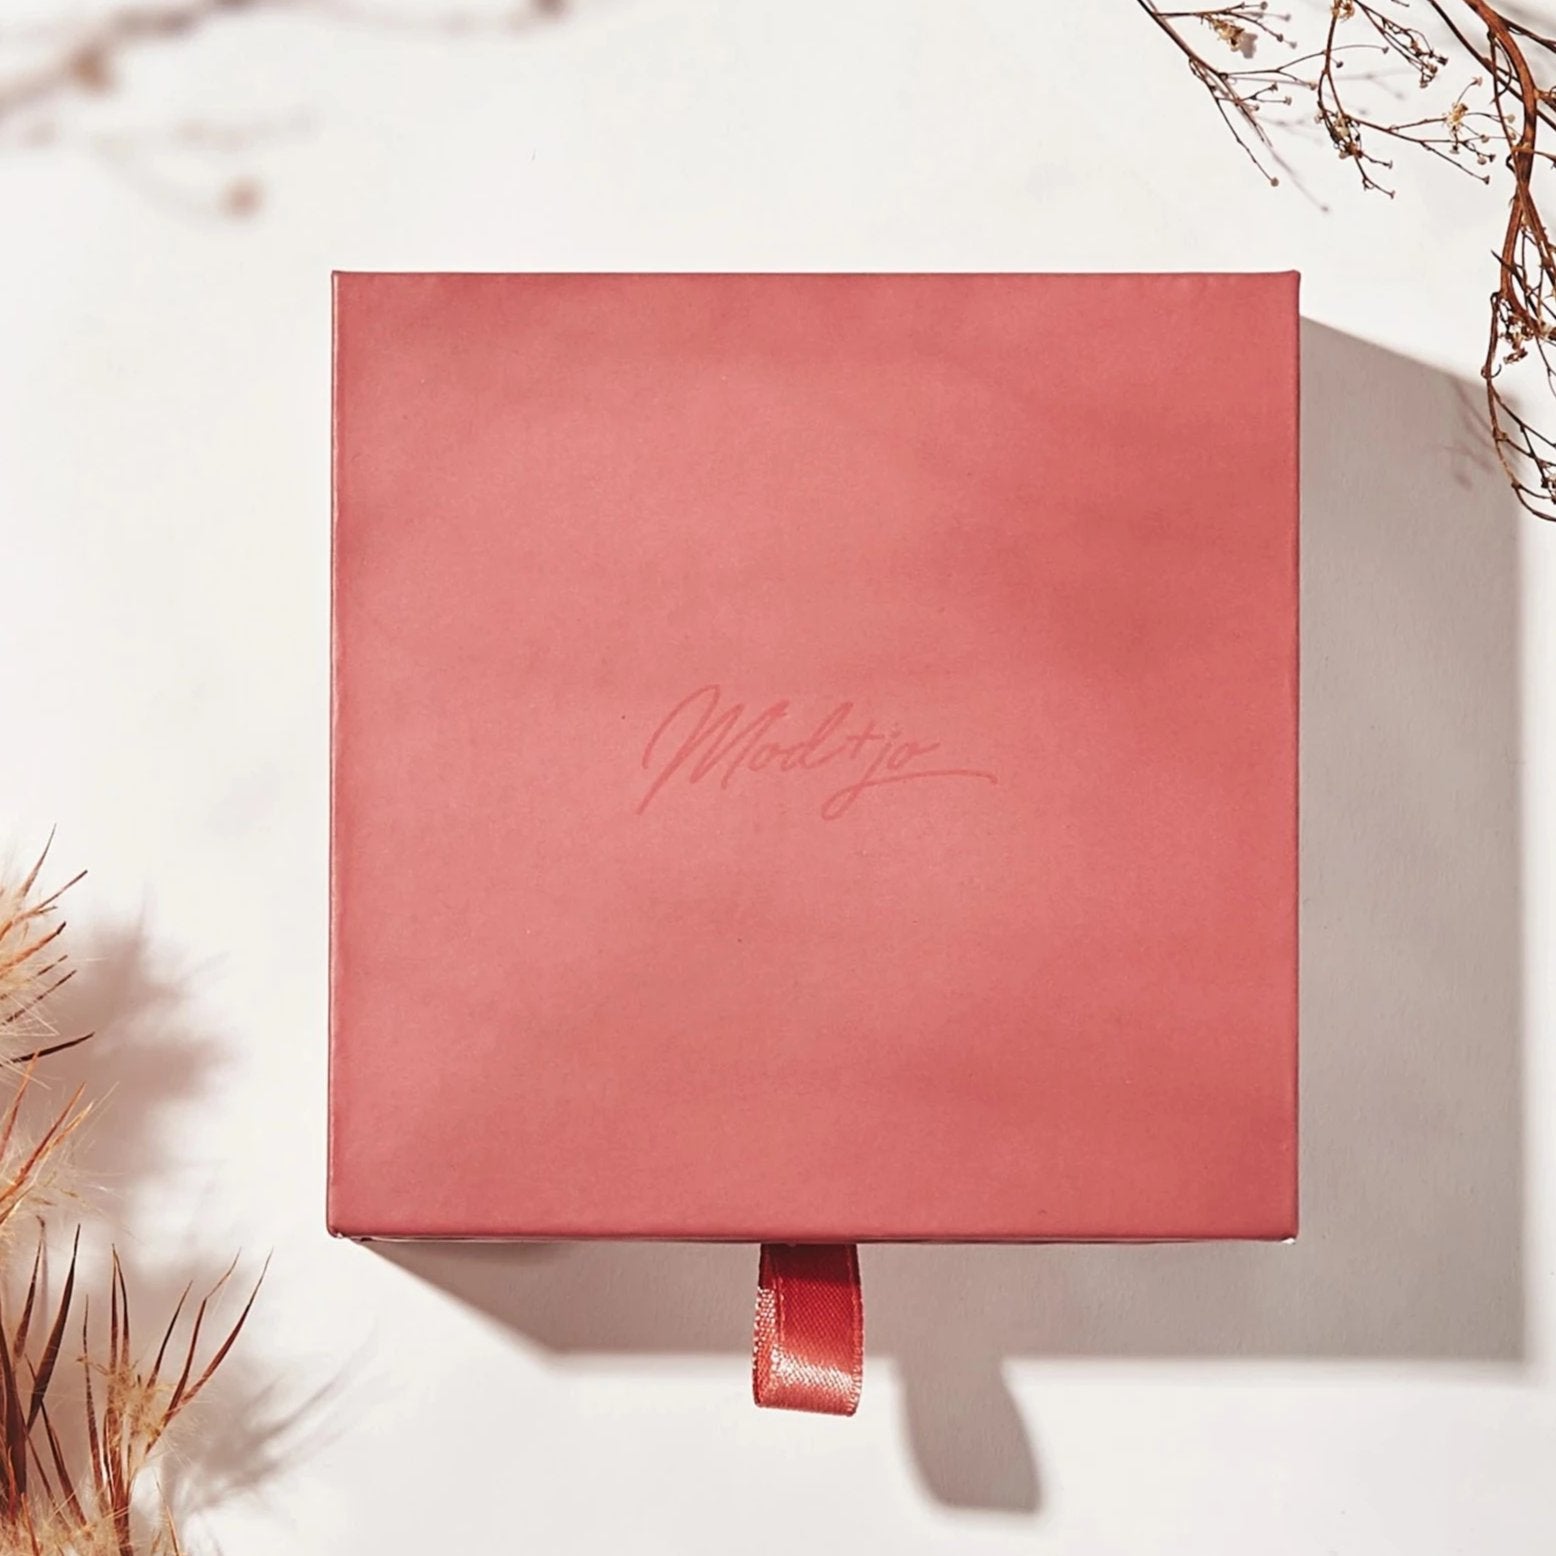 Mod + Jo Brand Box - Gift - MOD + JO